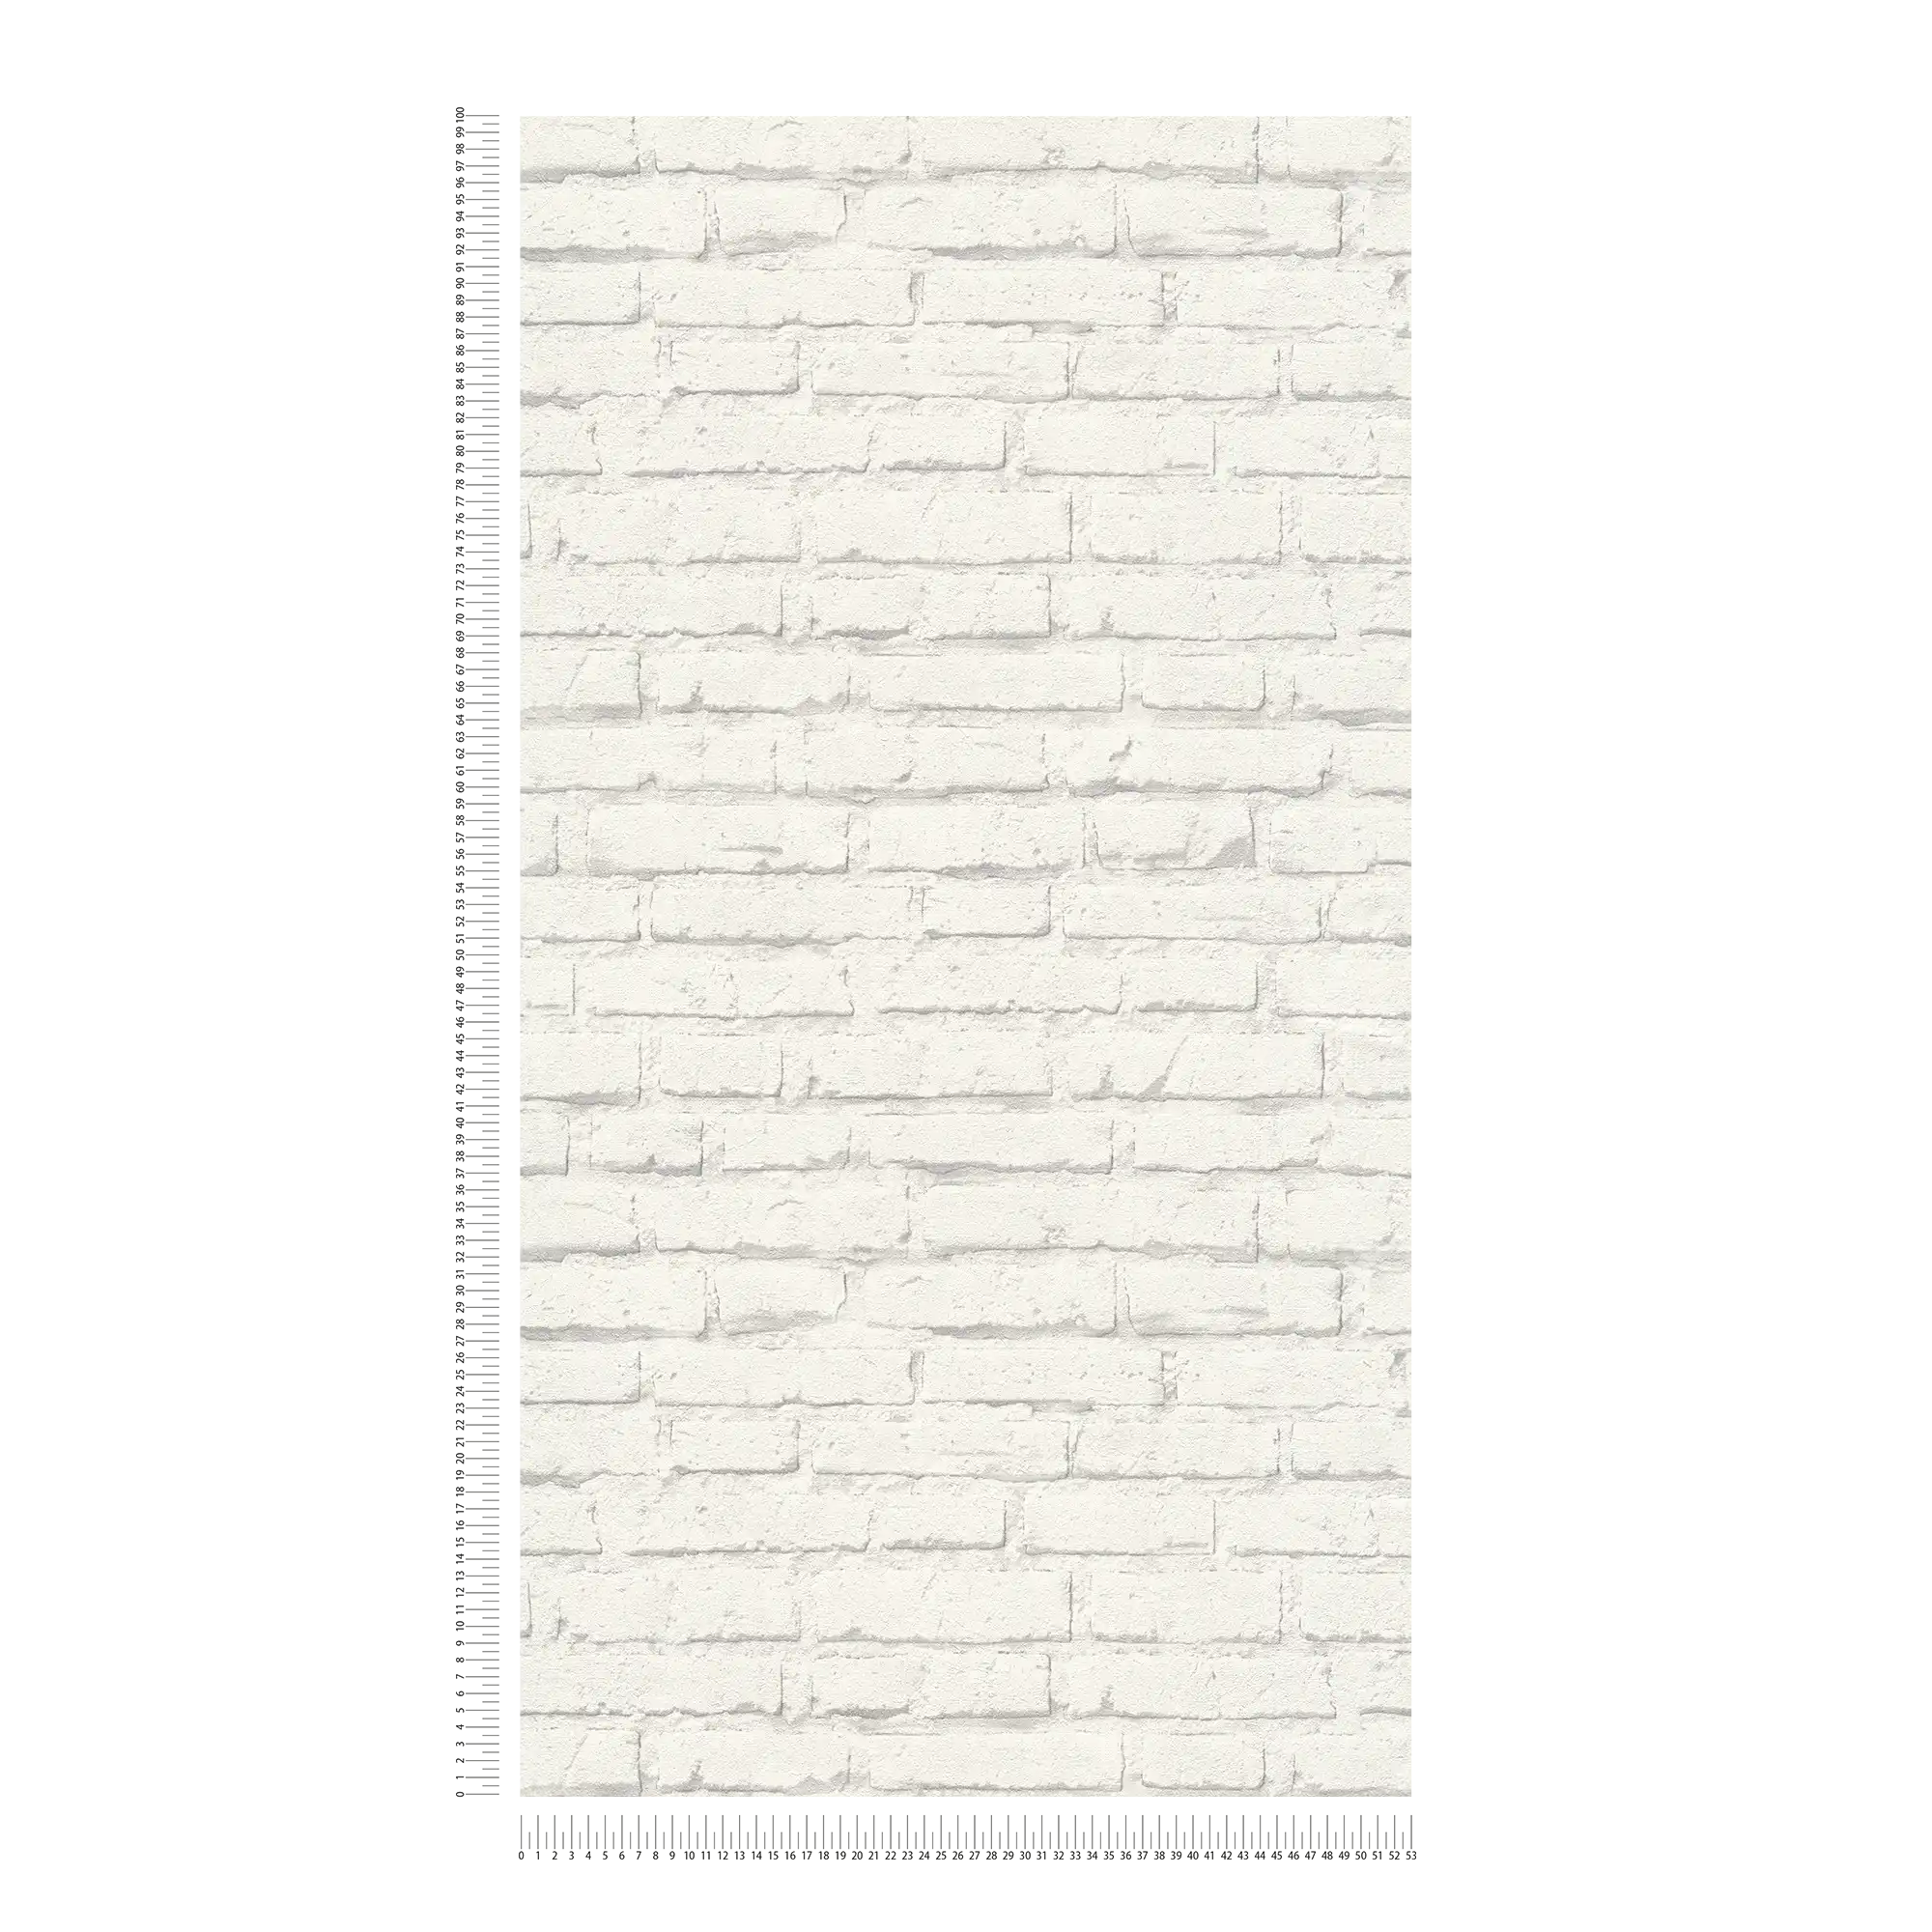             Stone wallpaper, white brick wall with texture pattern - grey, white
        